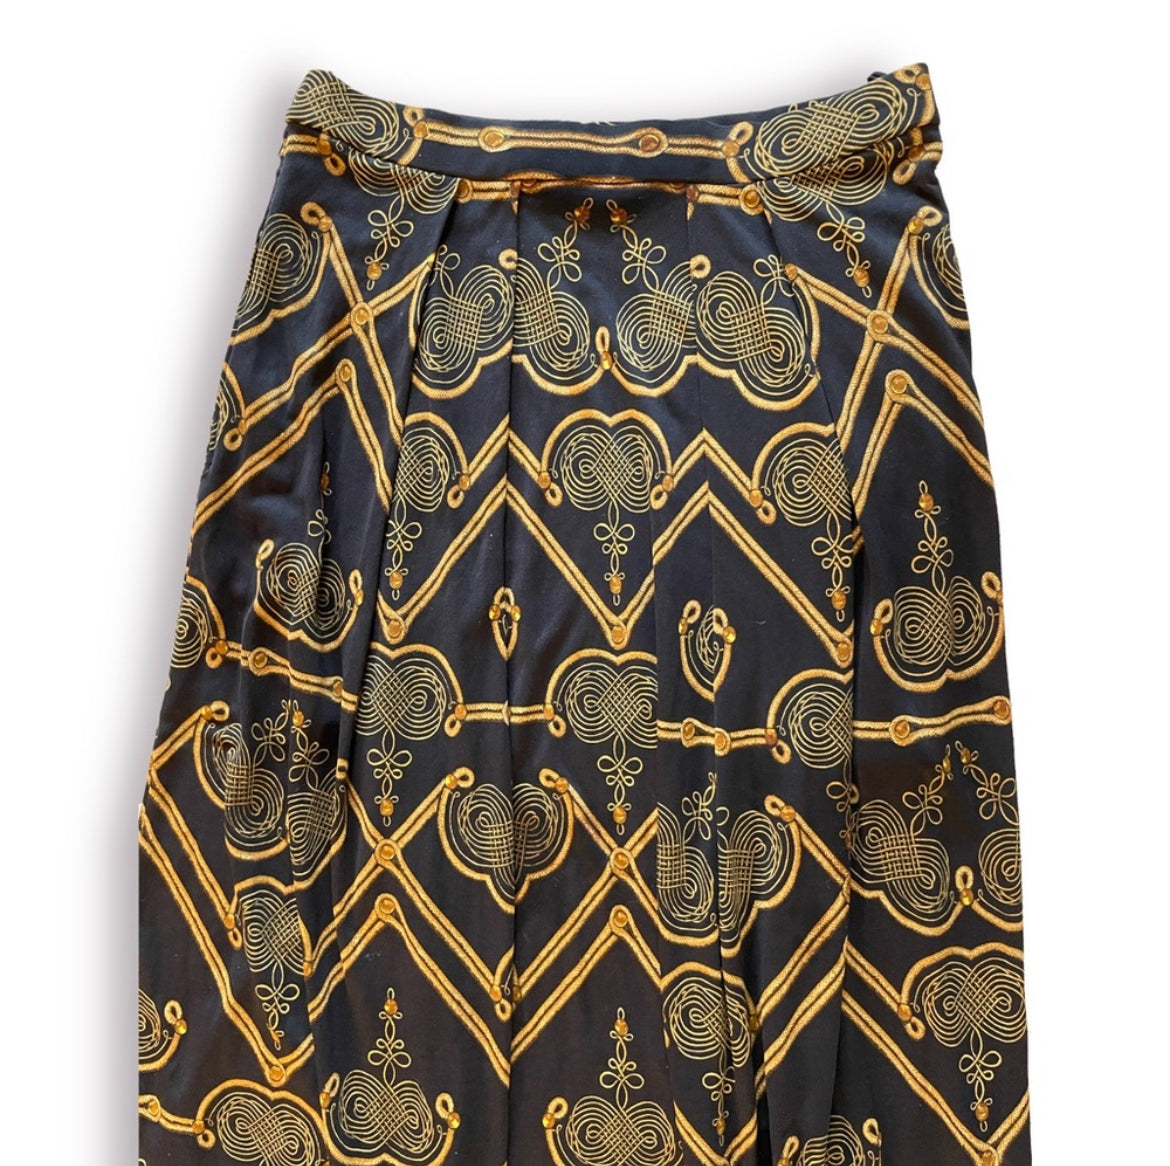 HERMÈS Vintage Classic Black & Gold Motif Print Skirt